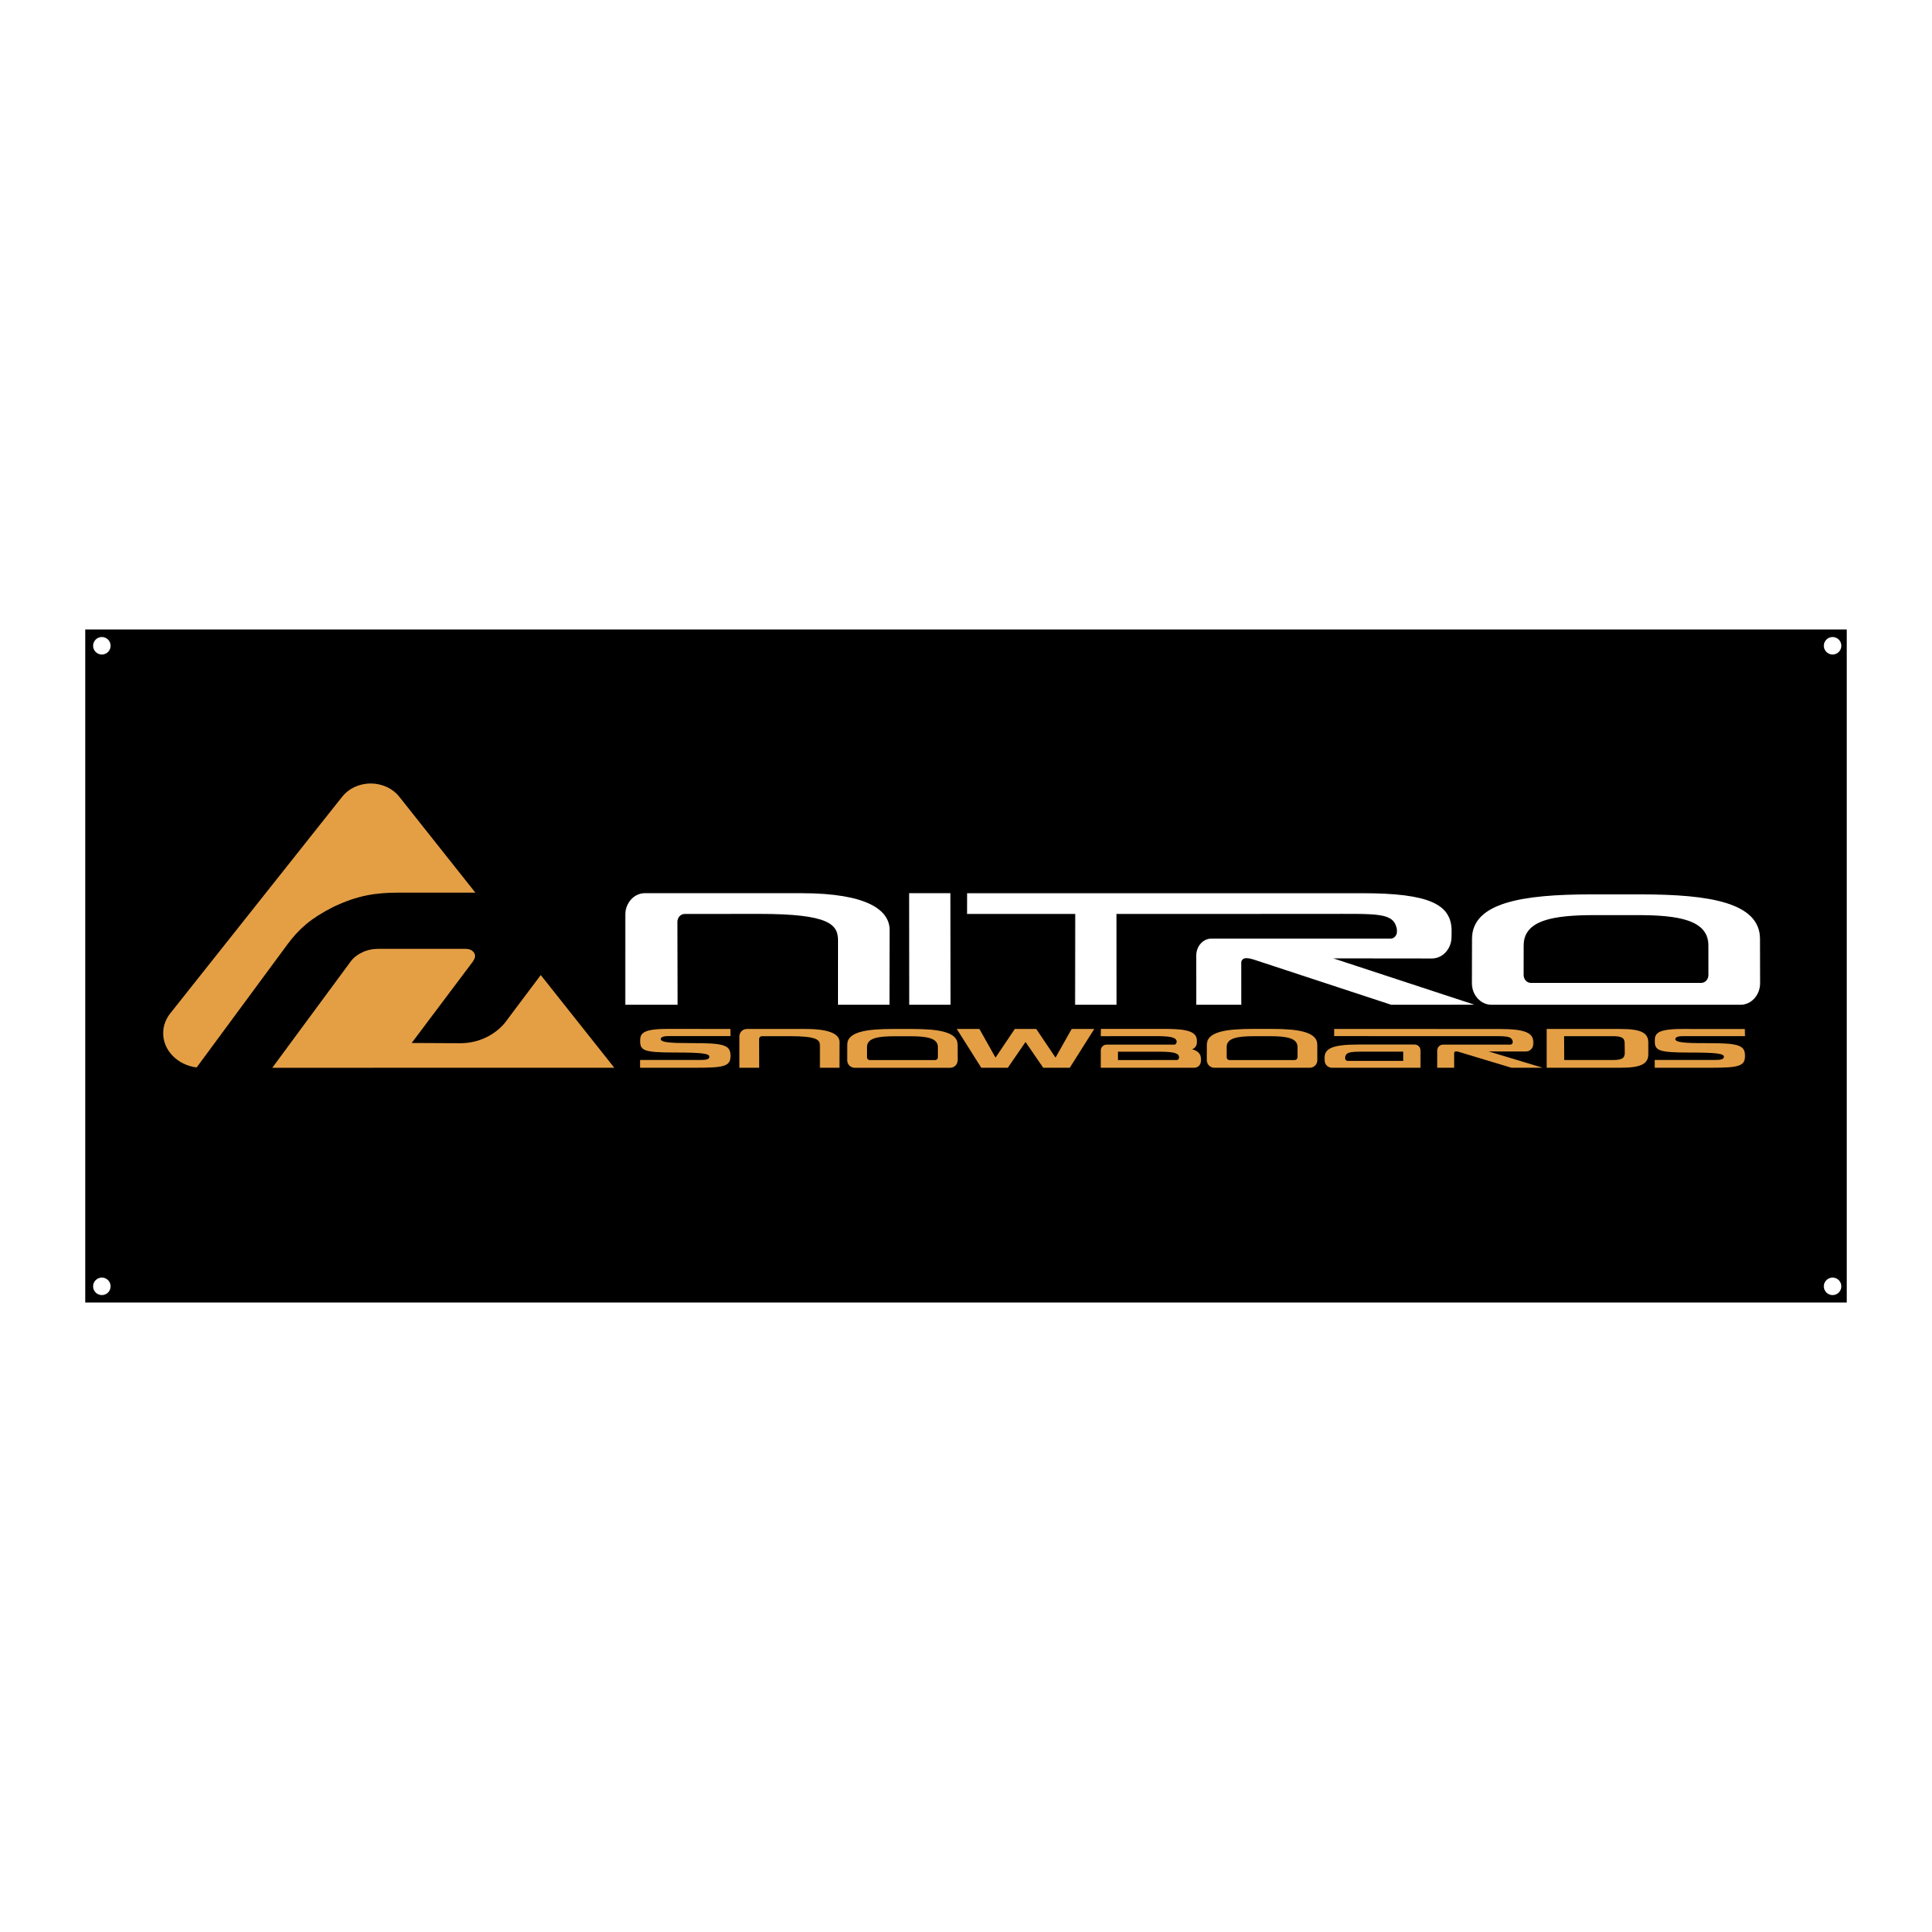 Nitro Logo - Nitro Logo PNG Transparent & SVG Vector - Freebie Supply